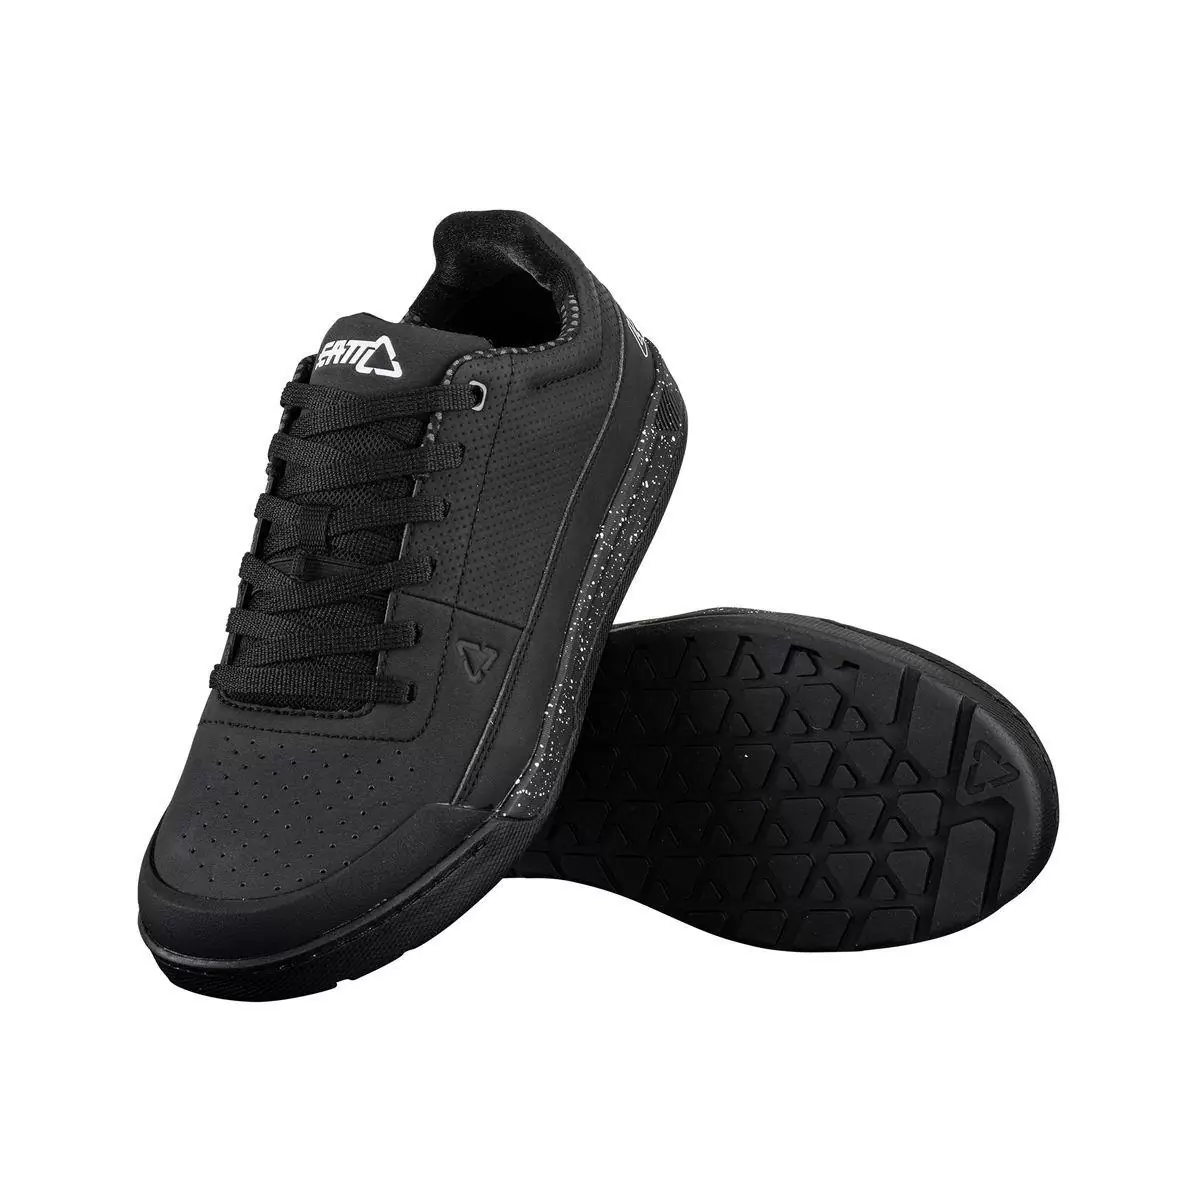 Mtb Shoes 2.0 Flat Black Size 45.5 #5